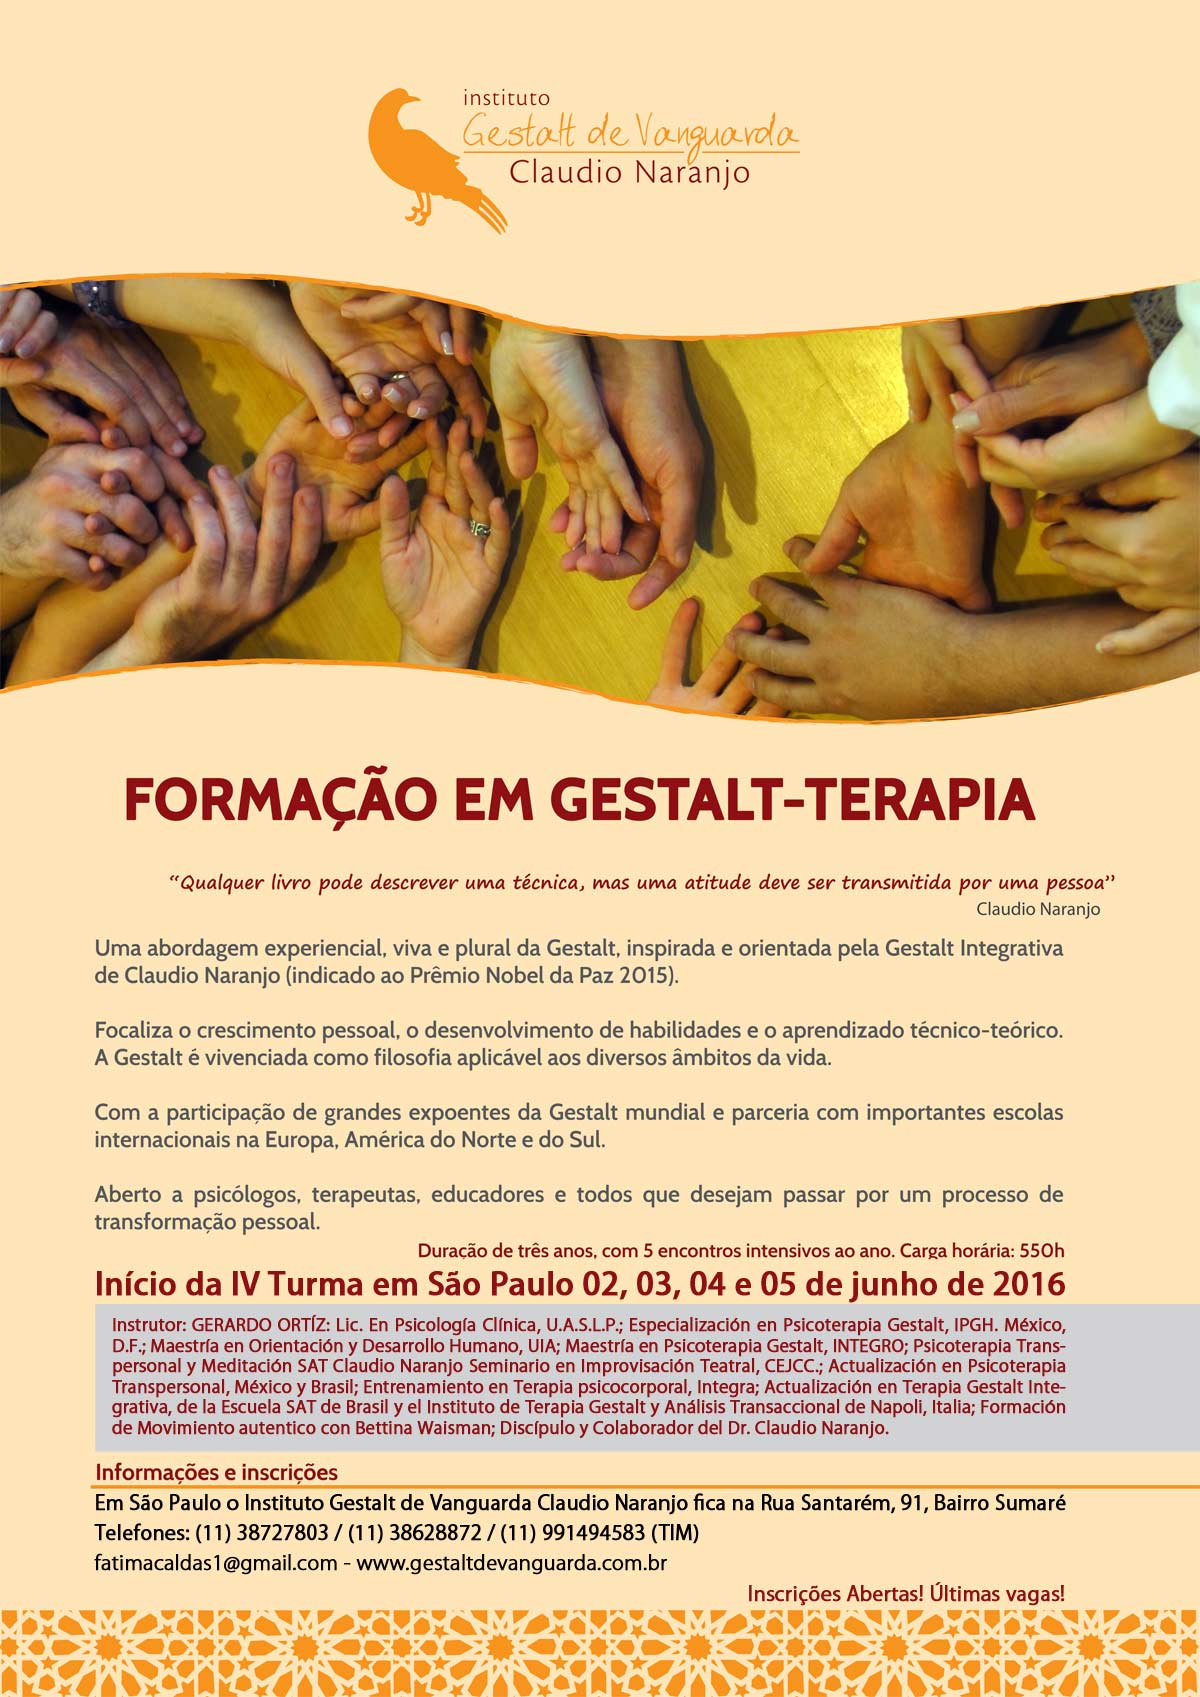 Formação em Gestalt Terapia Instituto gestlat de Vanguarda Claudio Naranjo-modulos iniciais